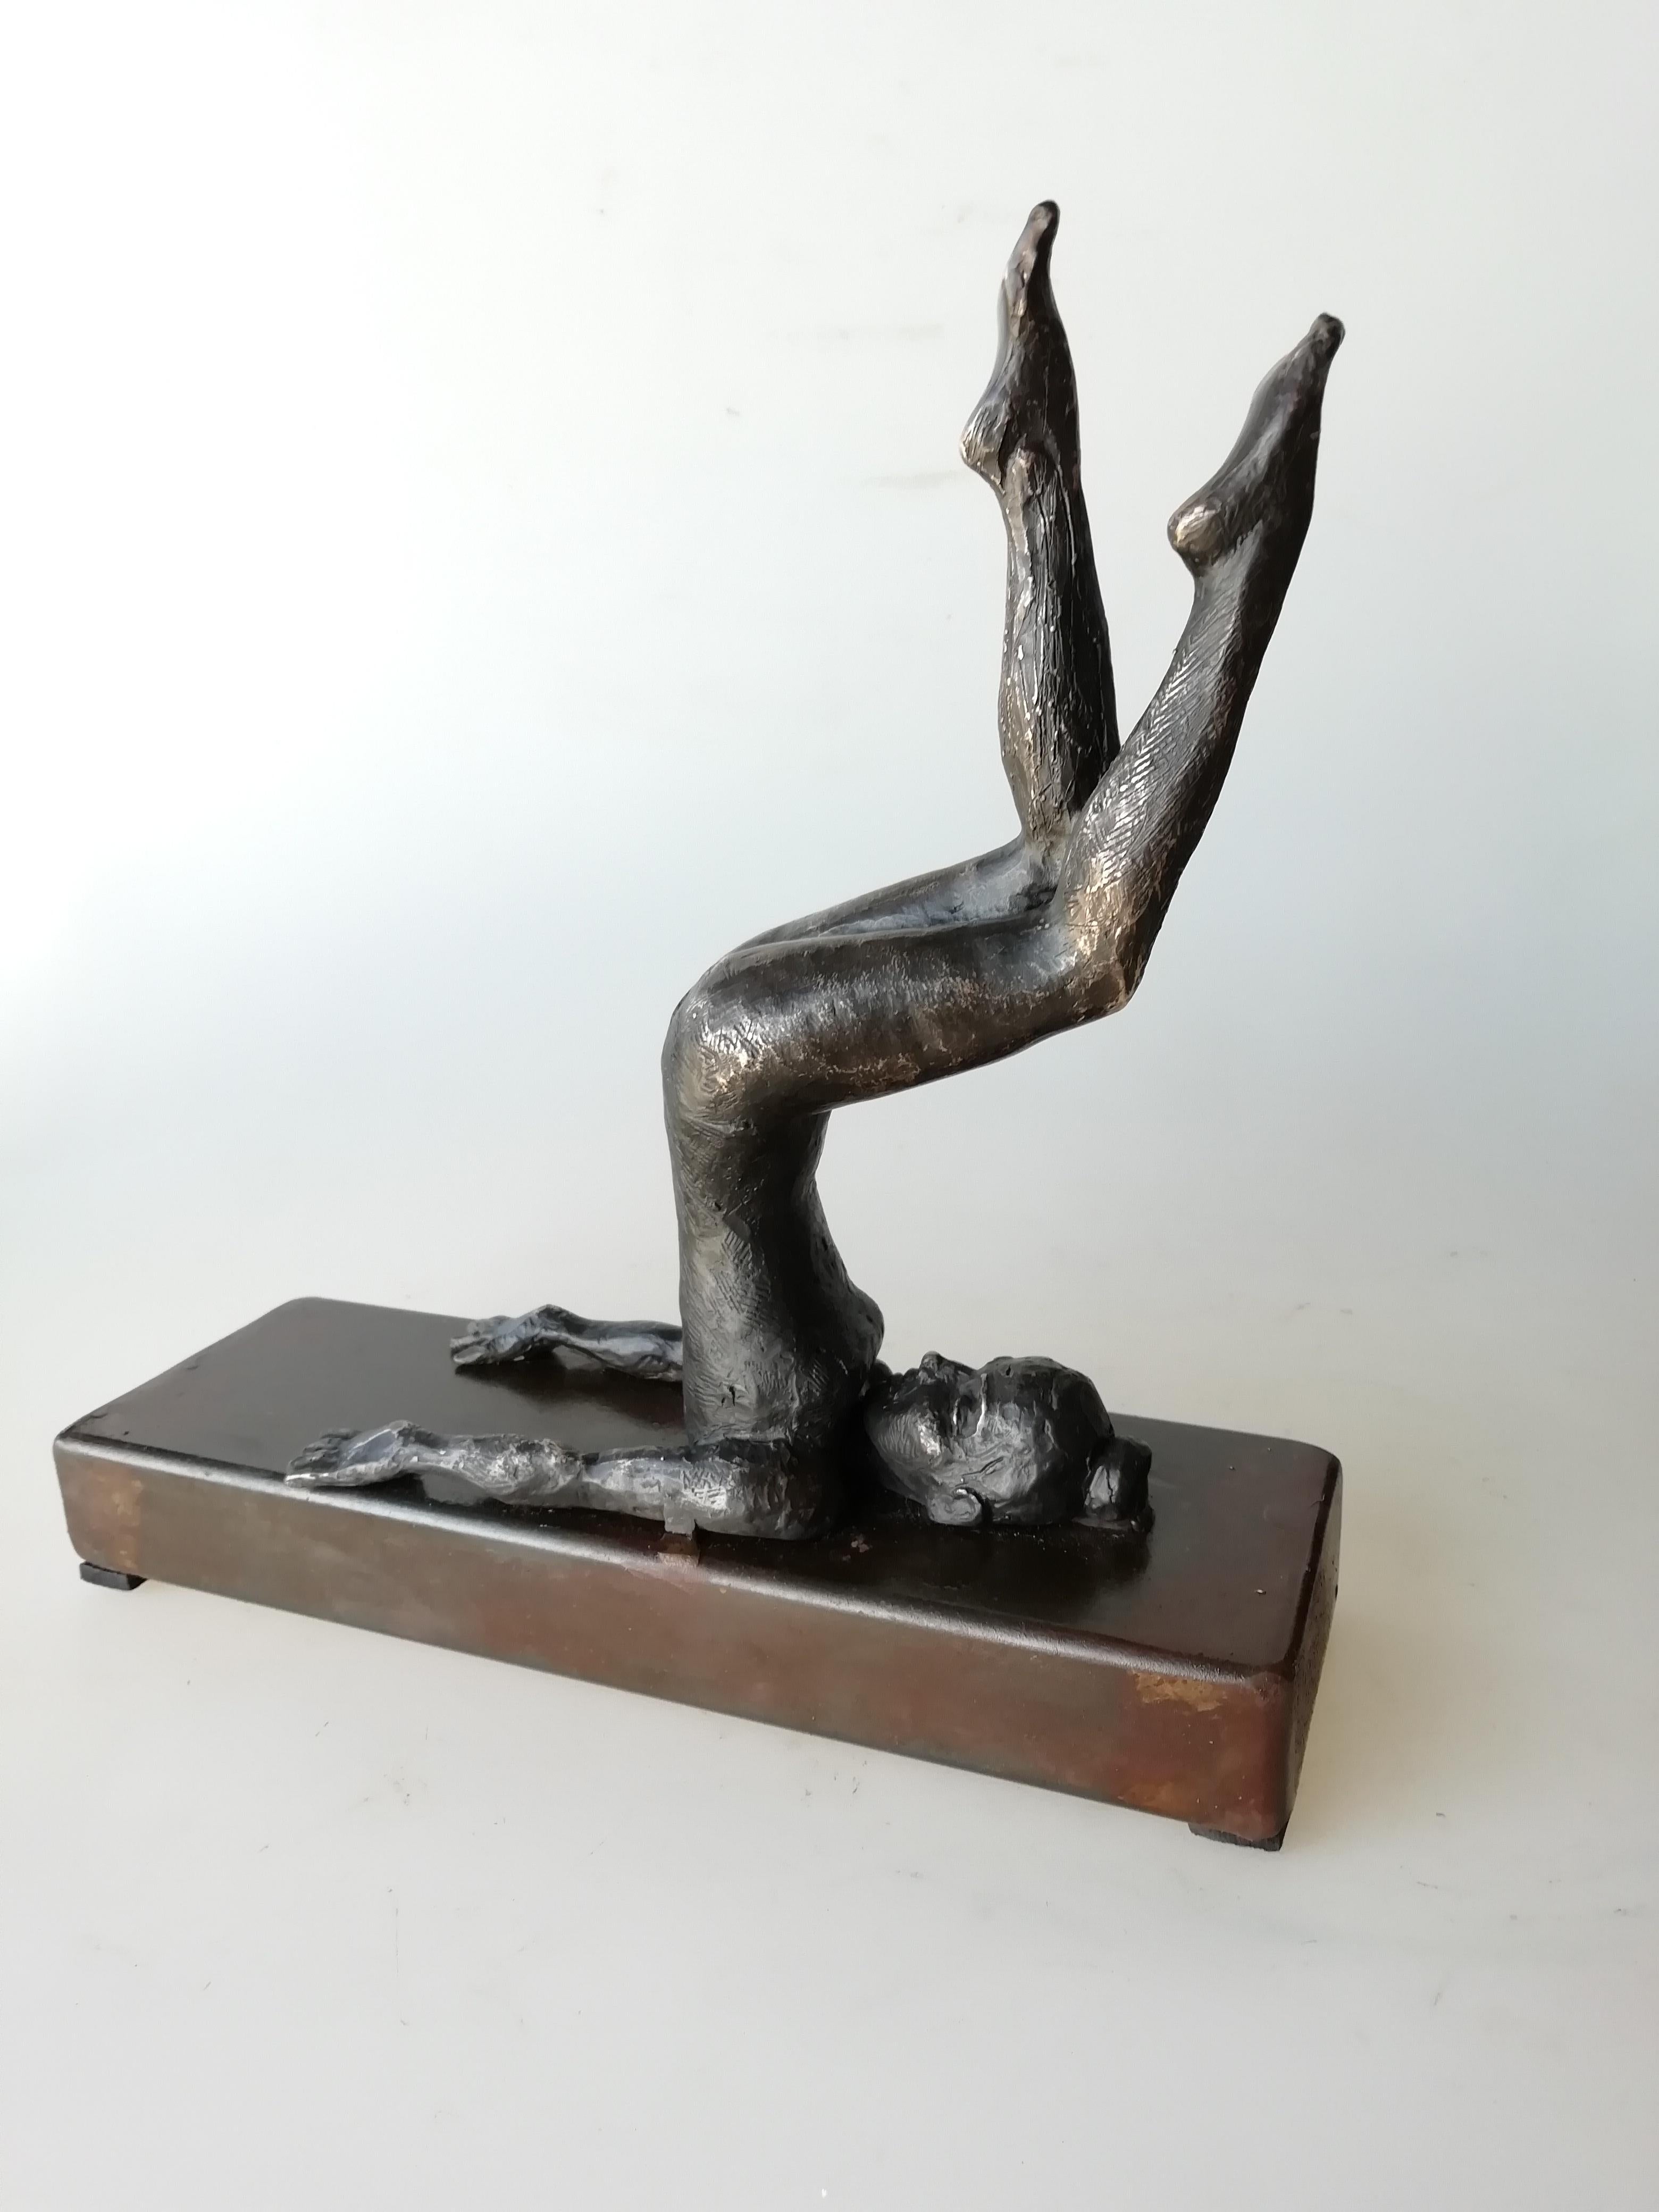 Joan Artigas Planas Figurative Sculpture - "Halasana" contemporary bronze table, mural sculpture figurative girl relax yoga